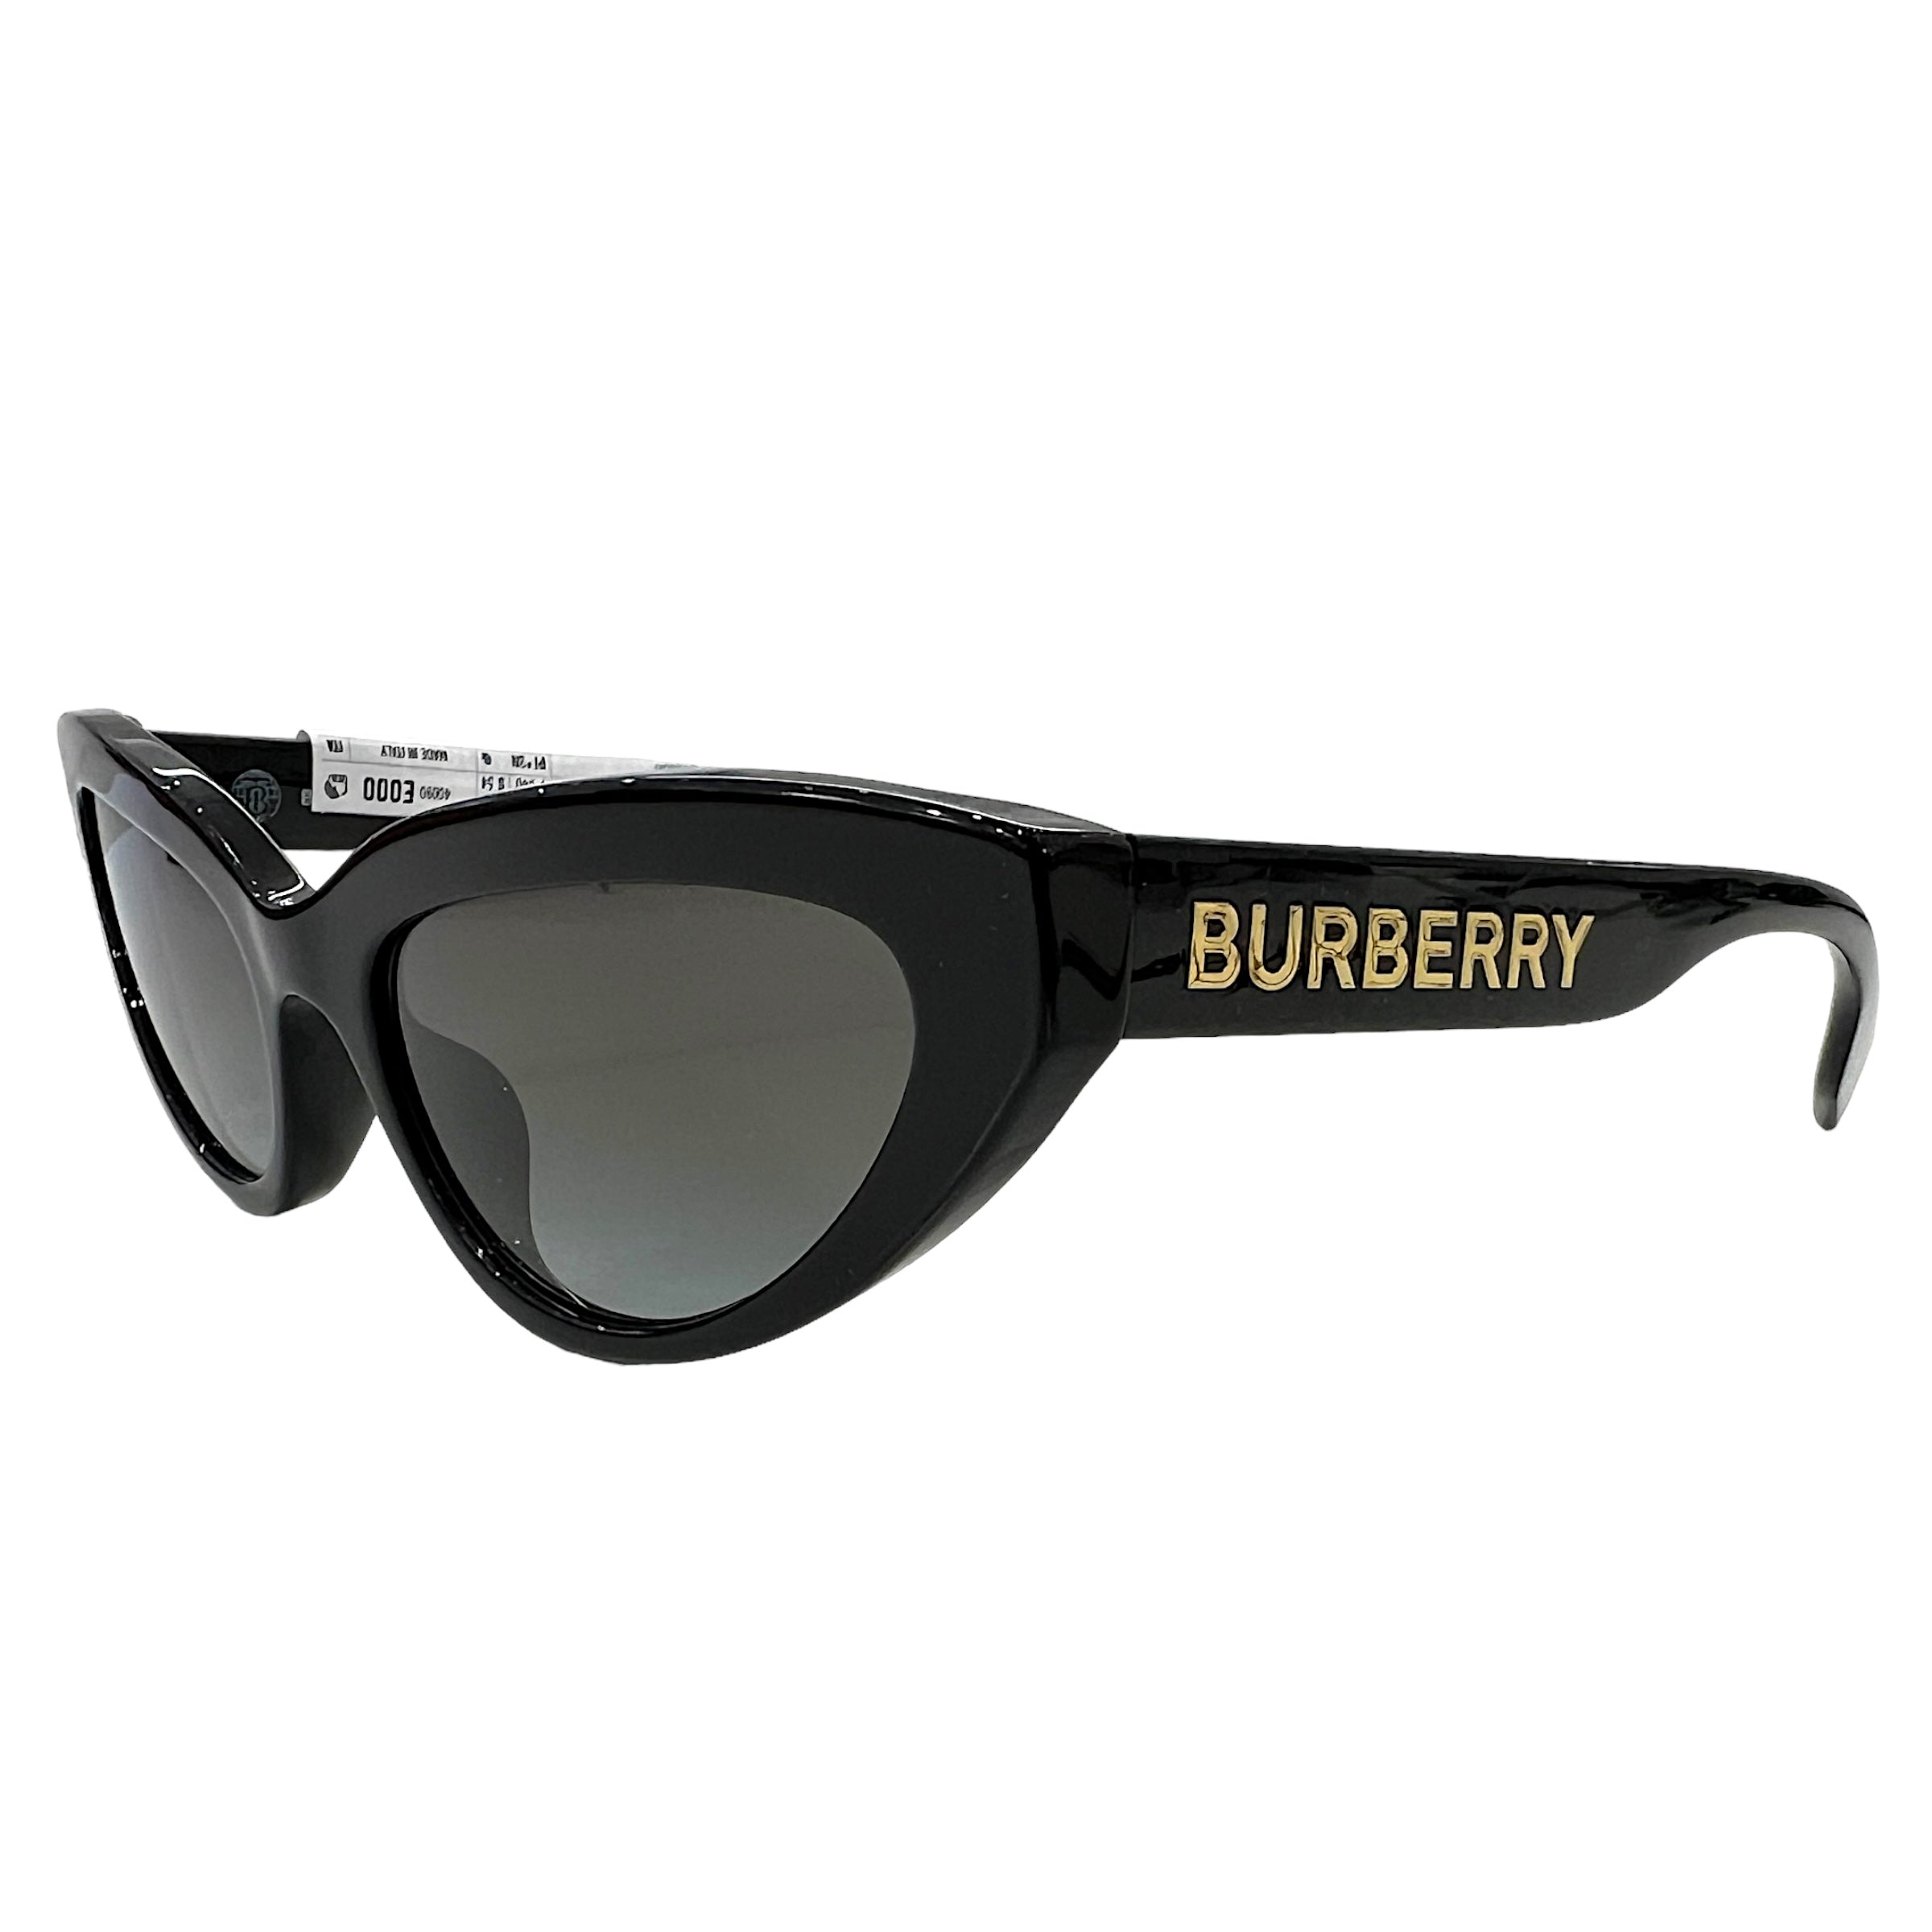 Burberry - B 4373-U 3001/8g